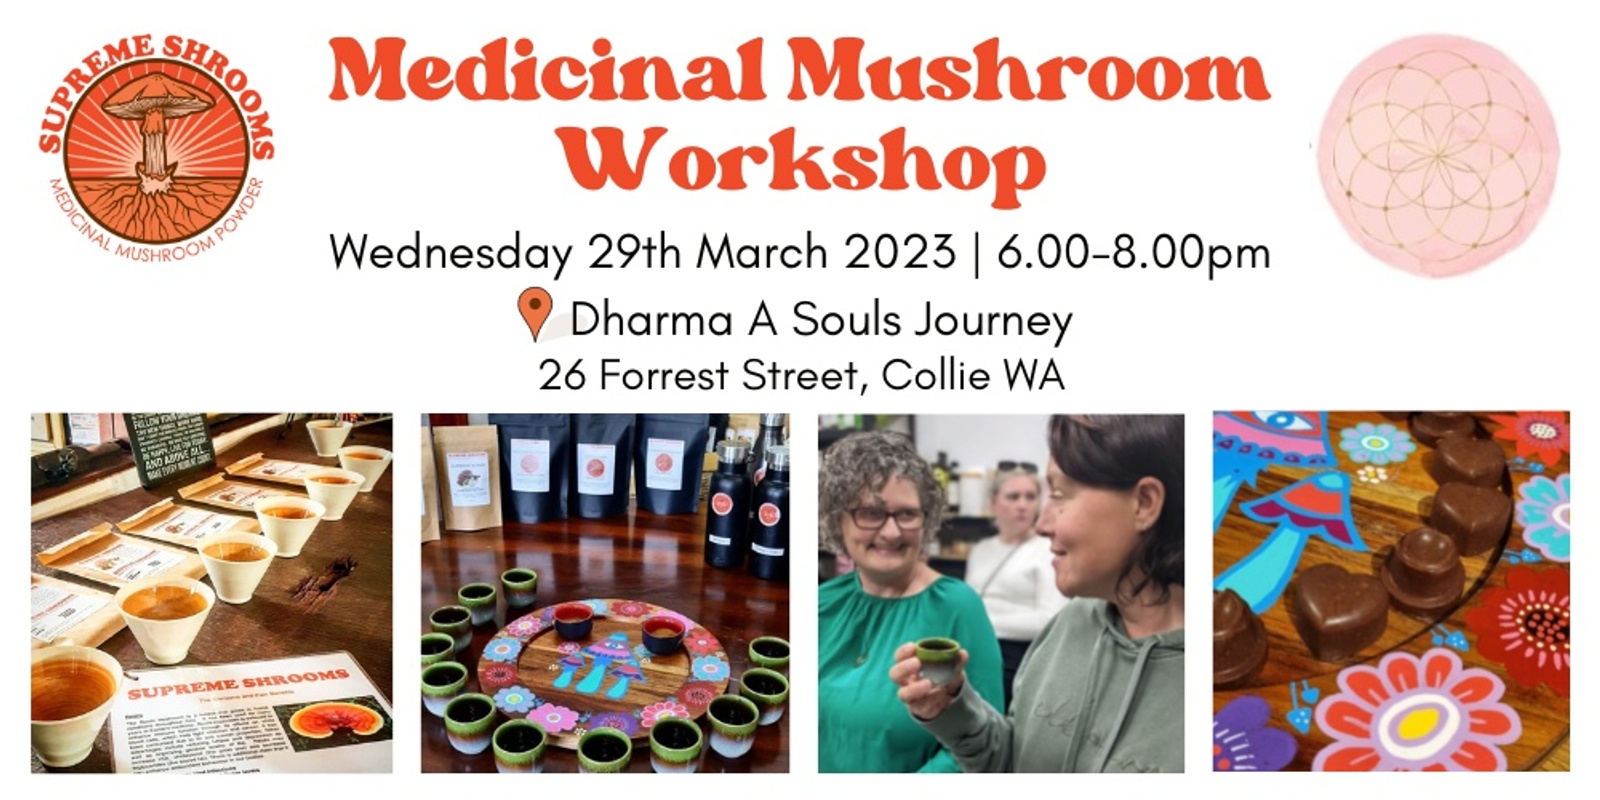 Medicinal Mushrooms Workshop at Dharma, Collie